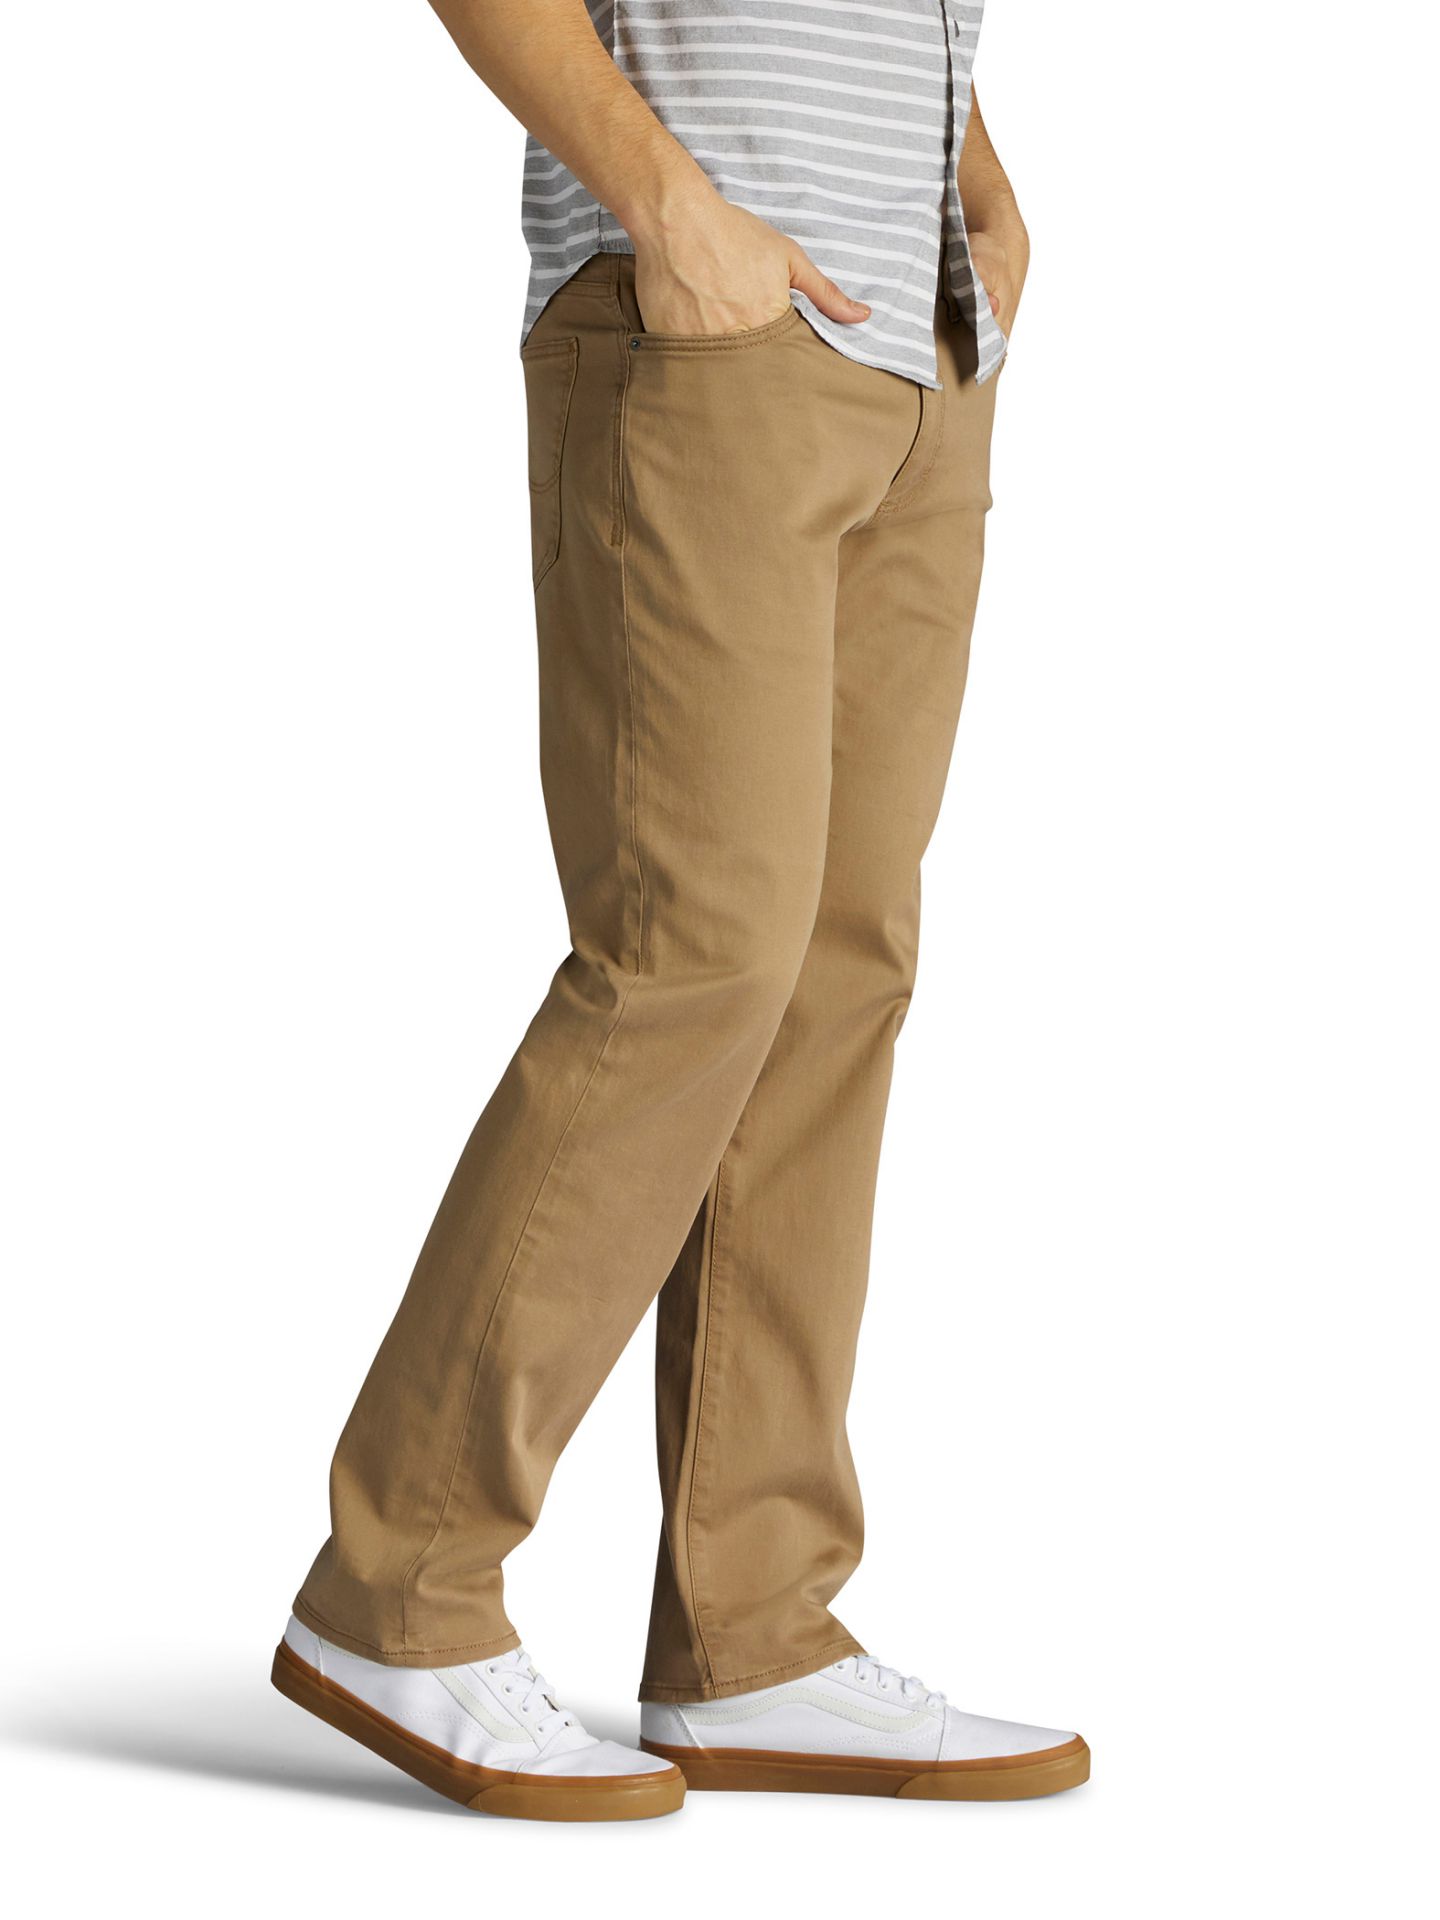 Straight Motion online Lee eBay Khaki Extreme 30x32 Stretch for Pants sale | Pocket 5 Midrise Cougar